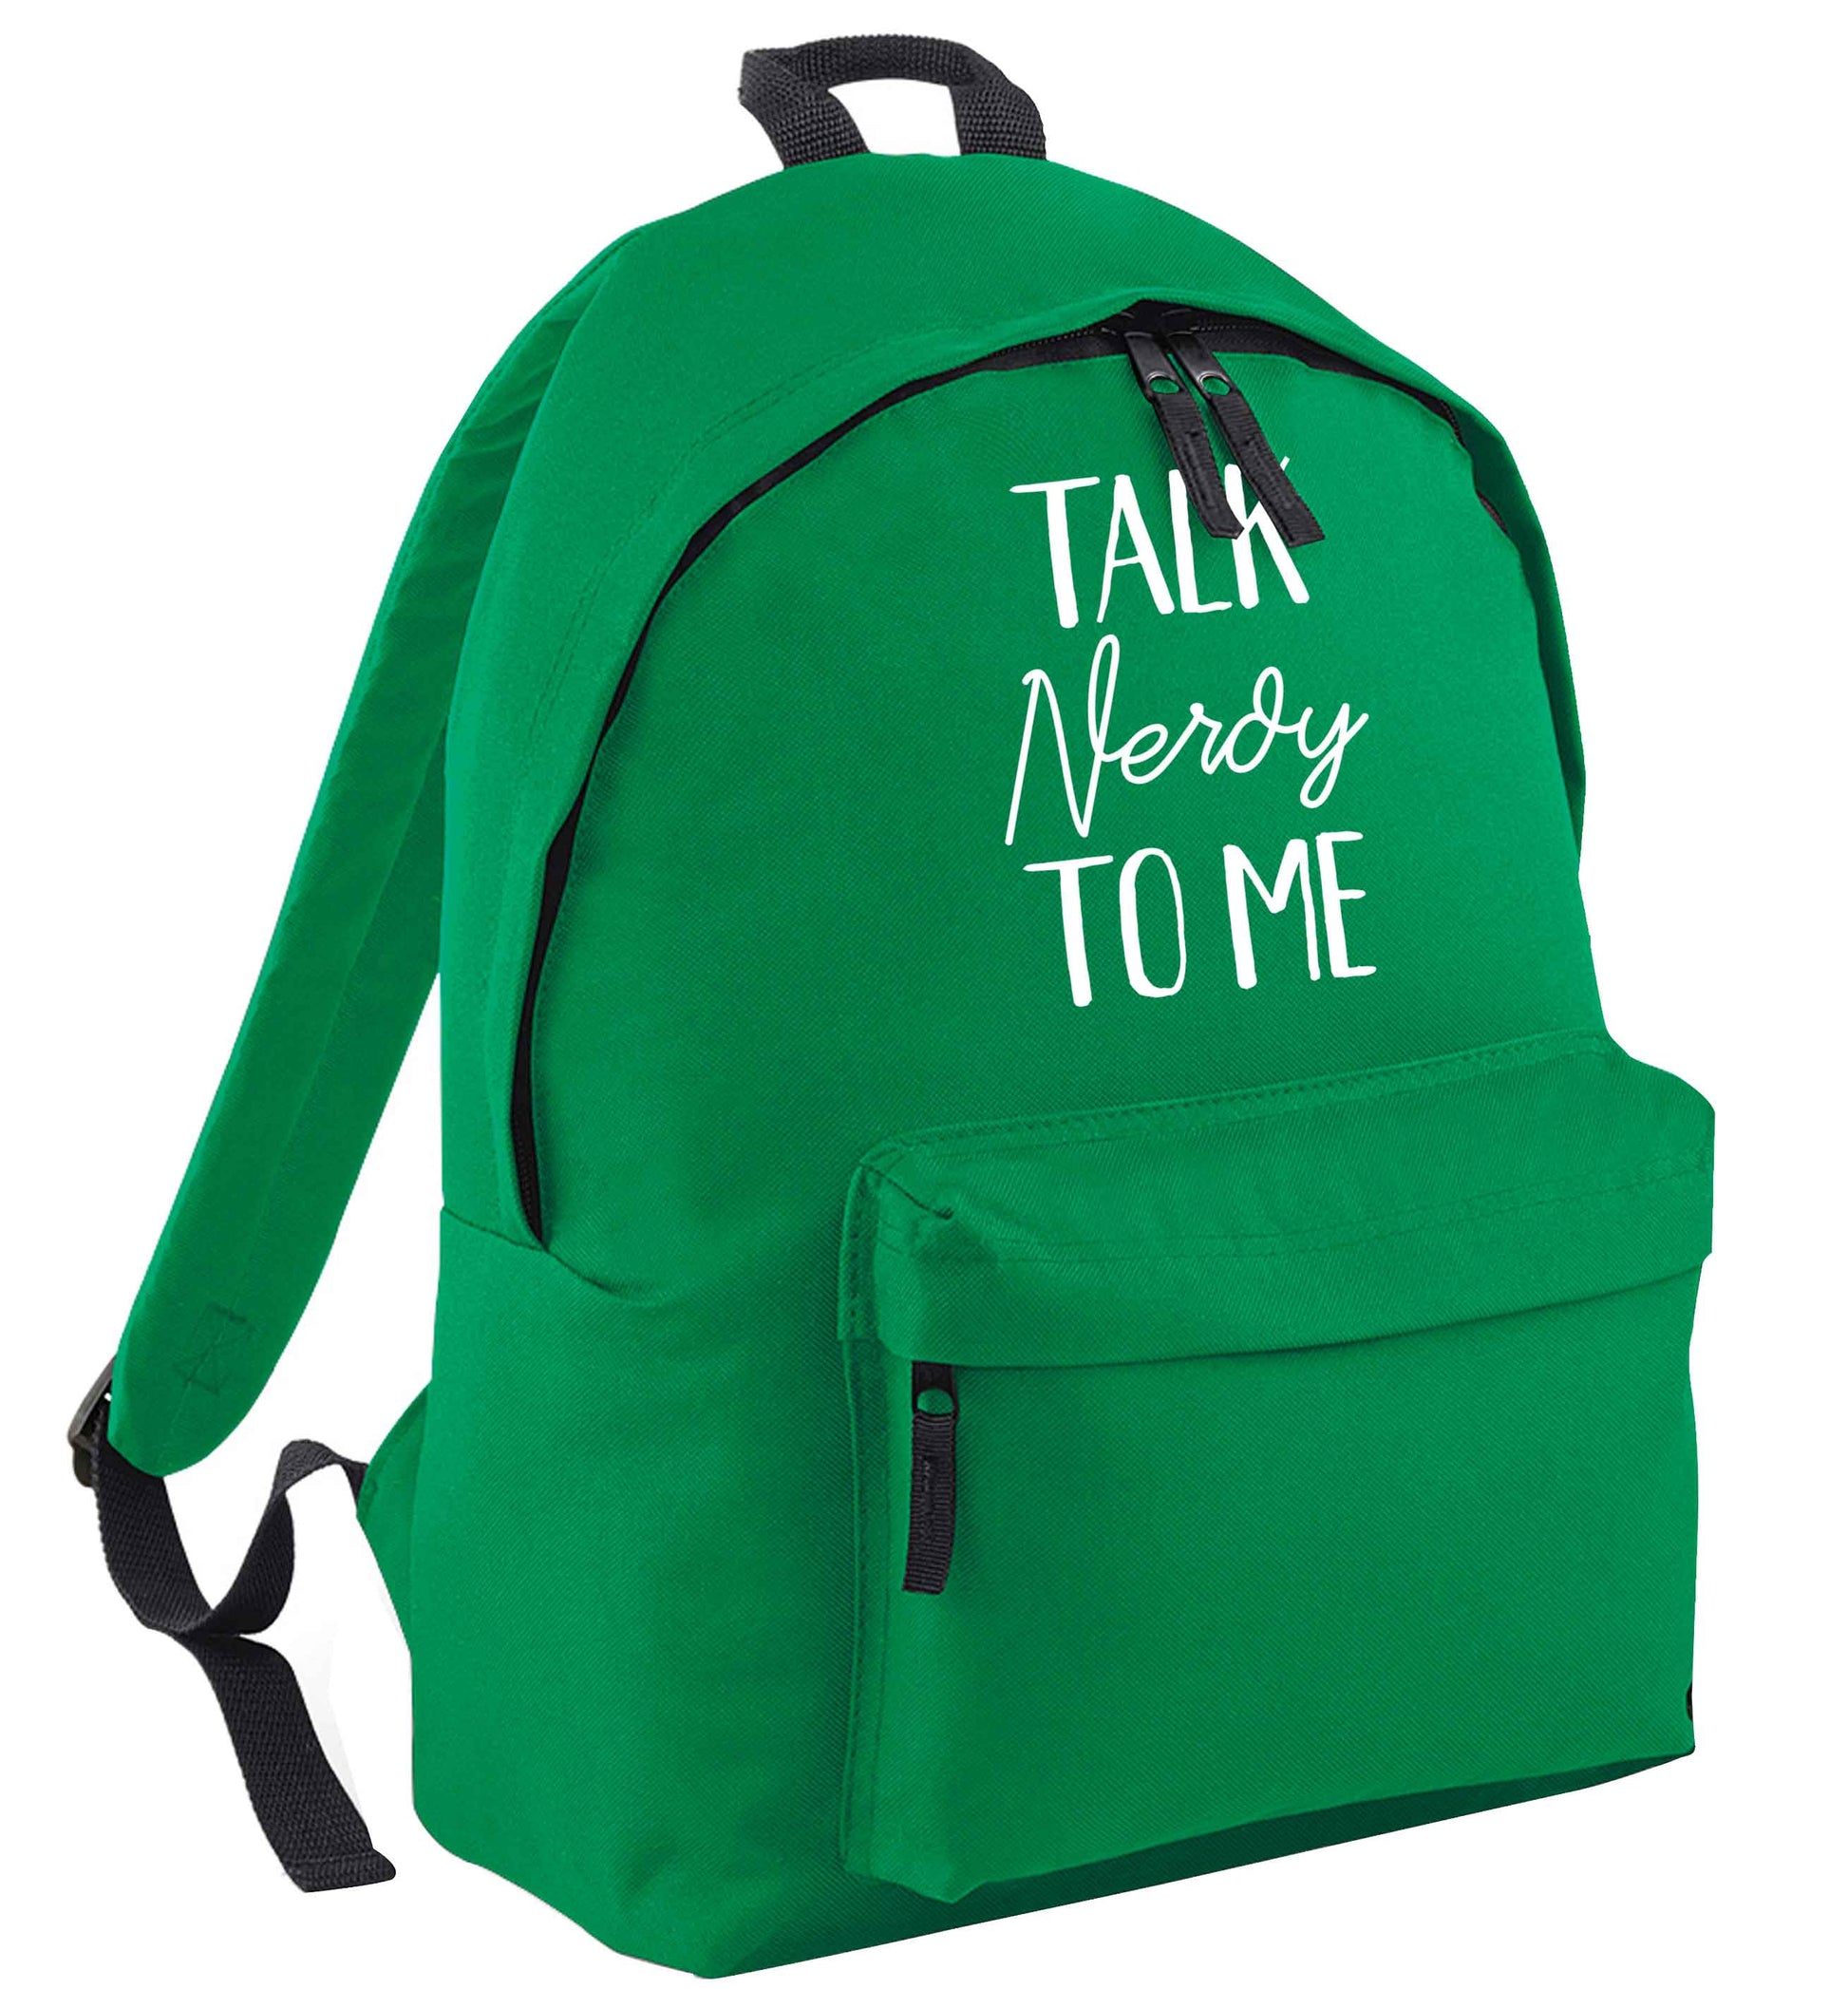 Talk nerdy to me green adults backpack